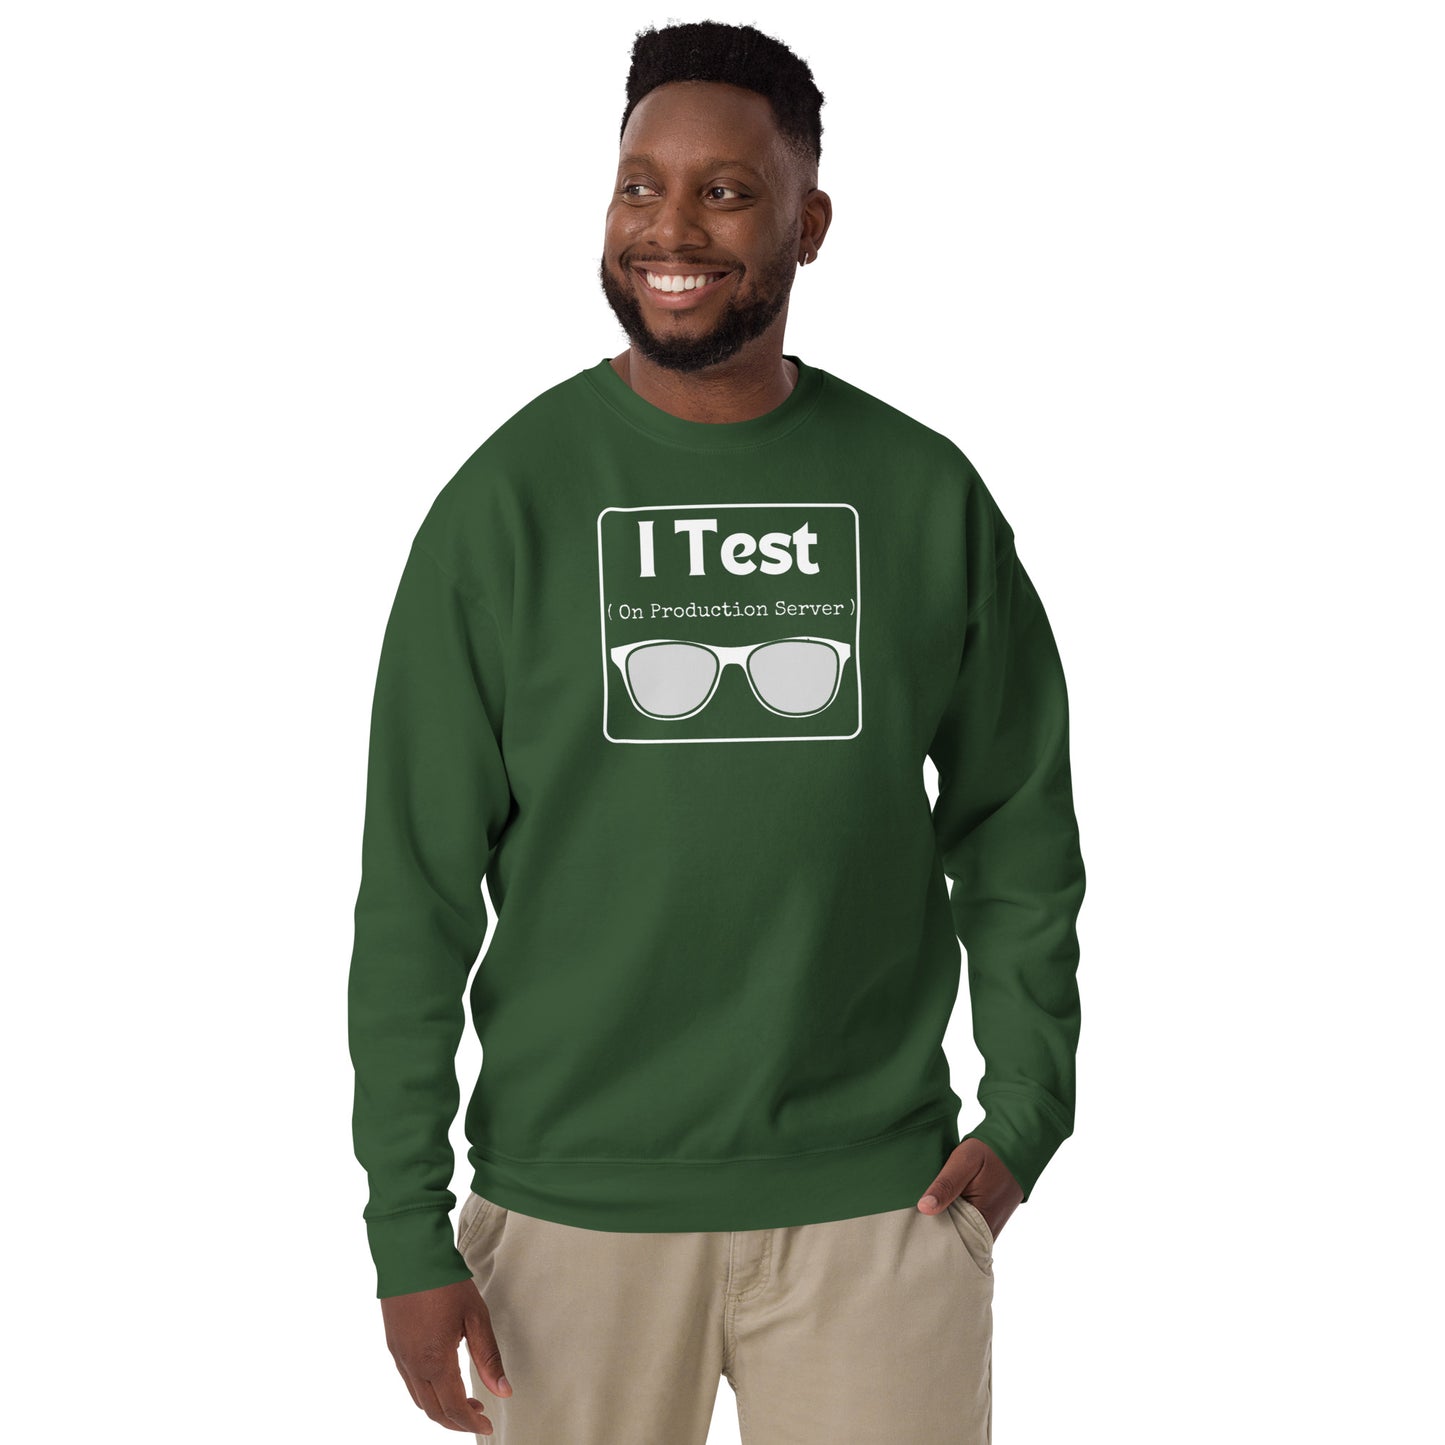 I Test on Production Premium Sweatshirt